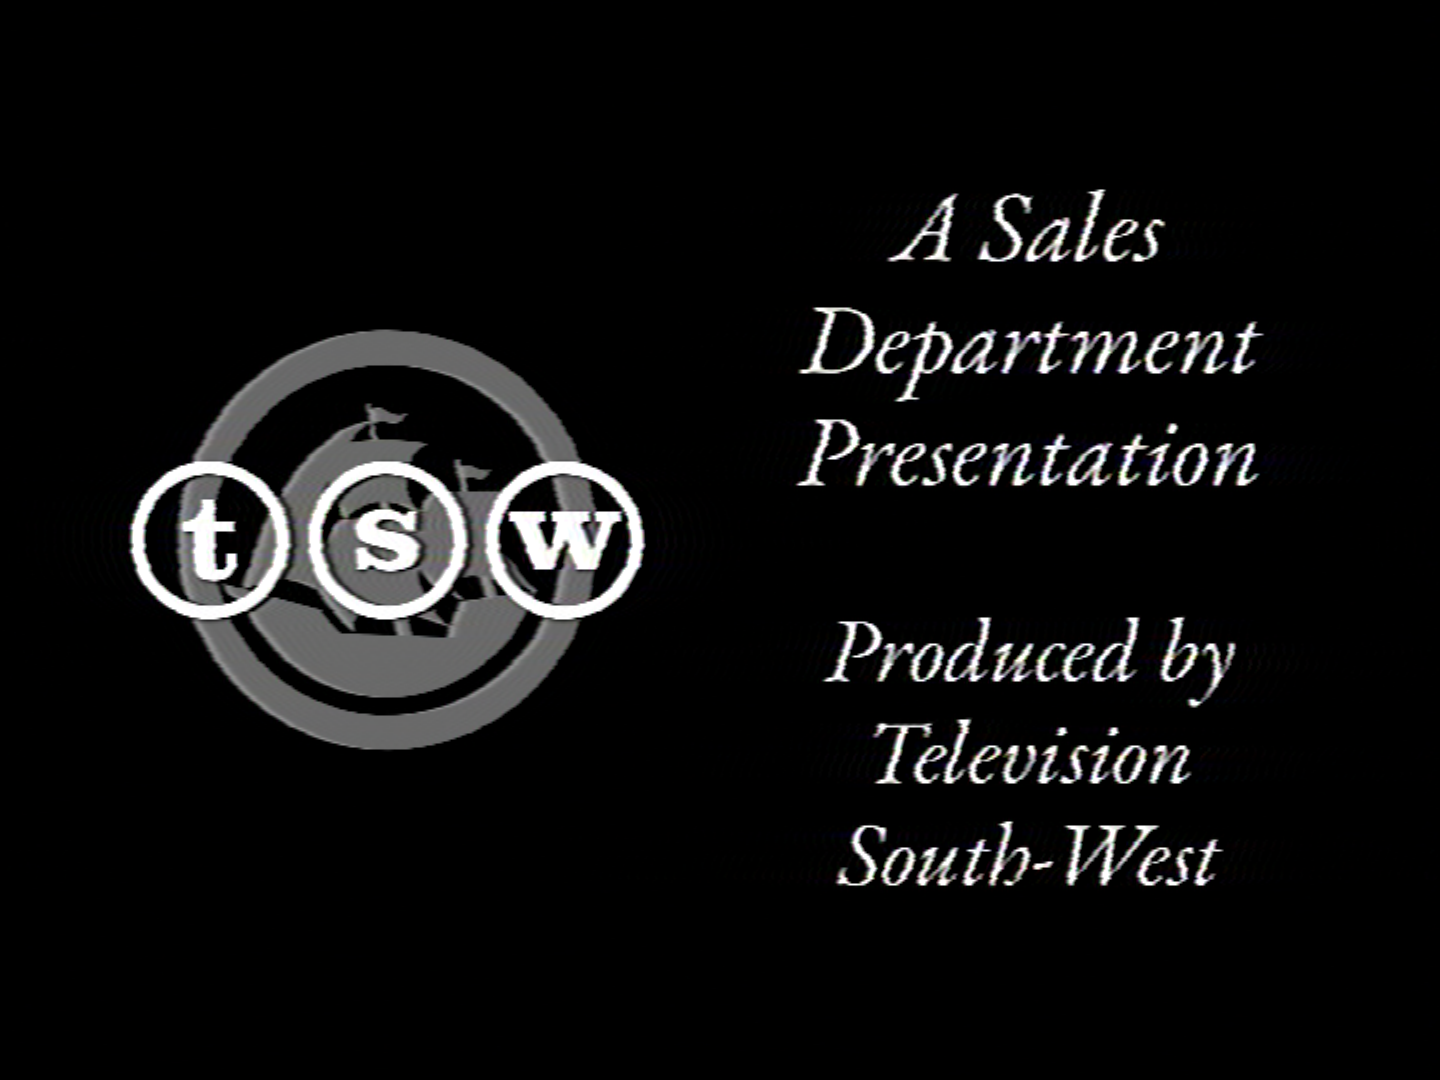 TSW Sales film ending (1961)